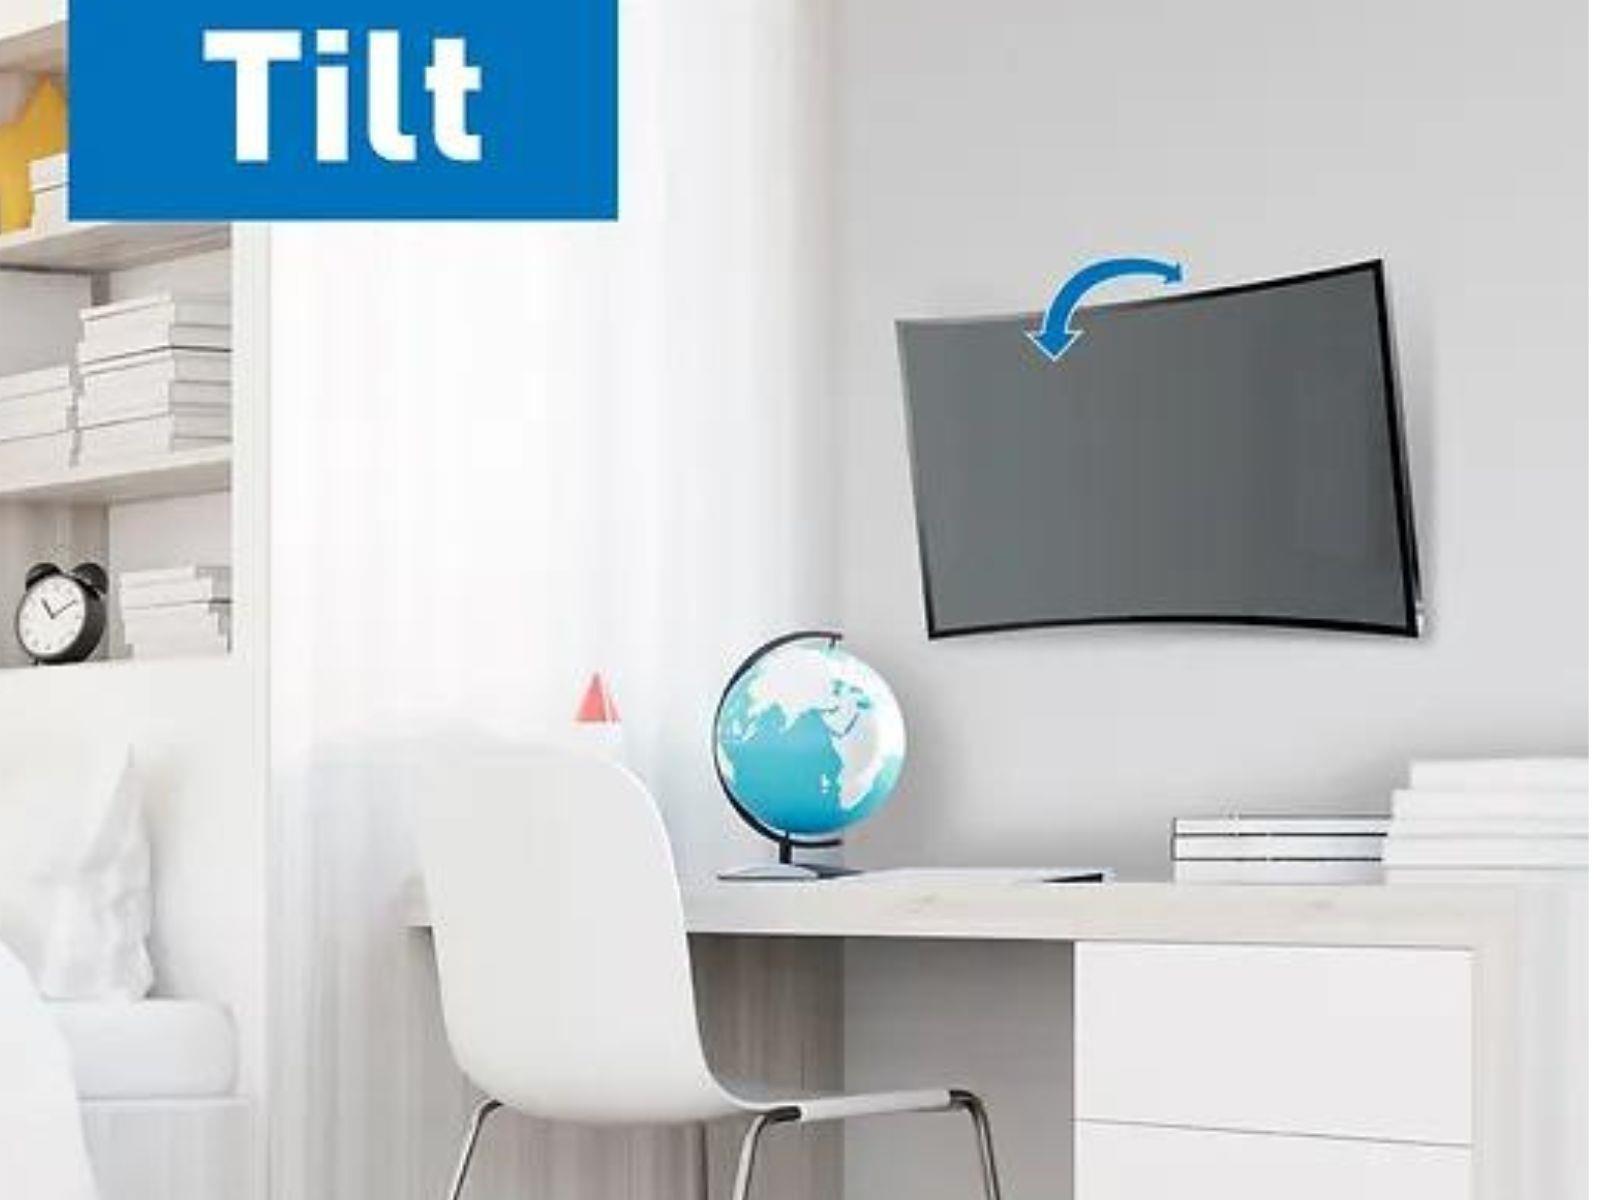 Monitor mounted using the Tilt TV Mounting Bracket Fits Sizes 15-26" TVs 